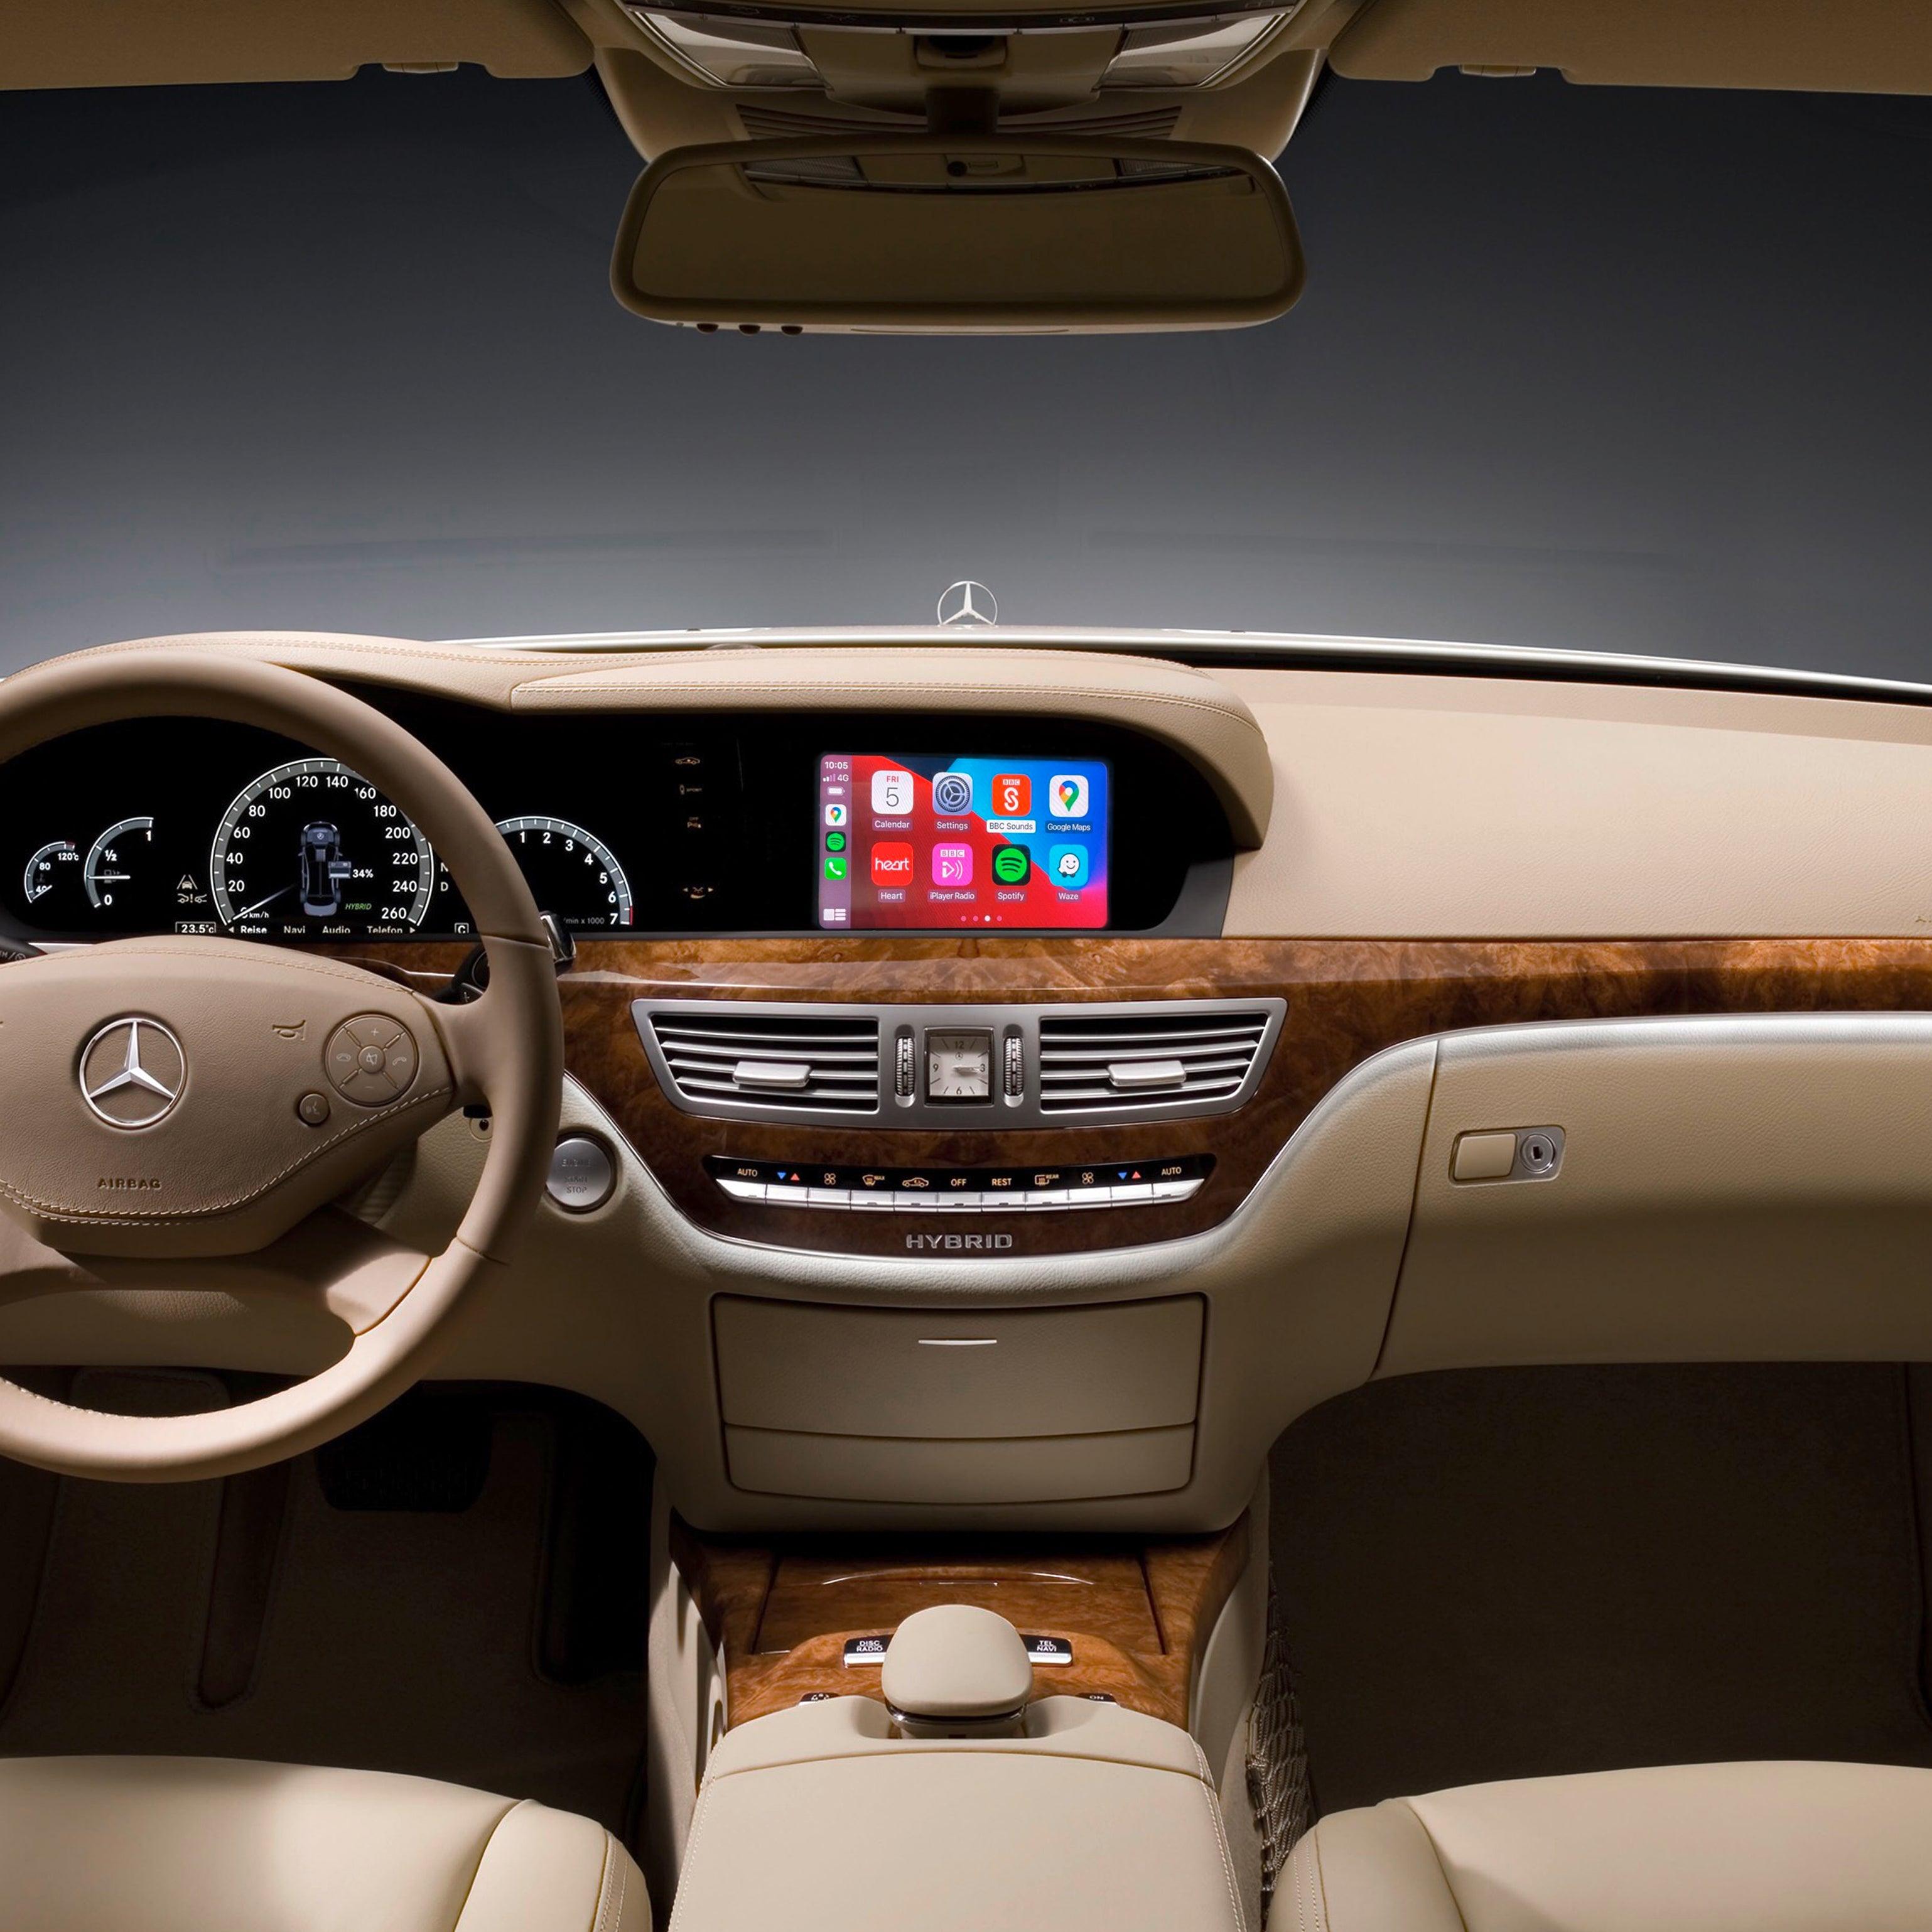 Mercedes S Class W221 Apple CarPlay Android Auto Interface MMI